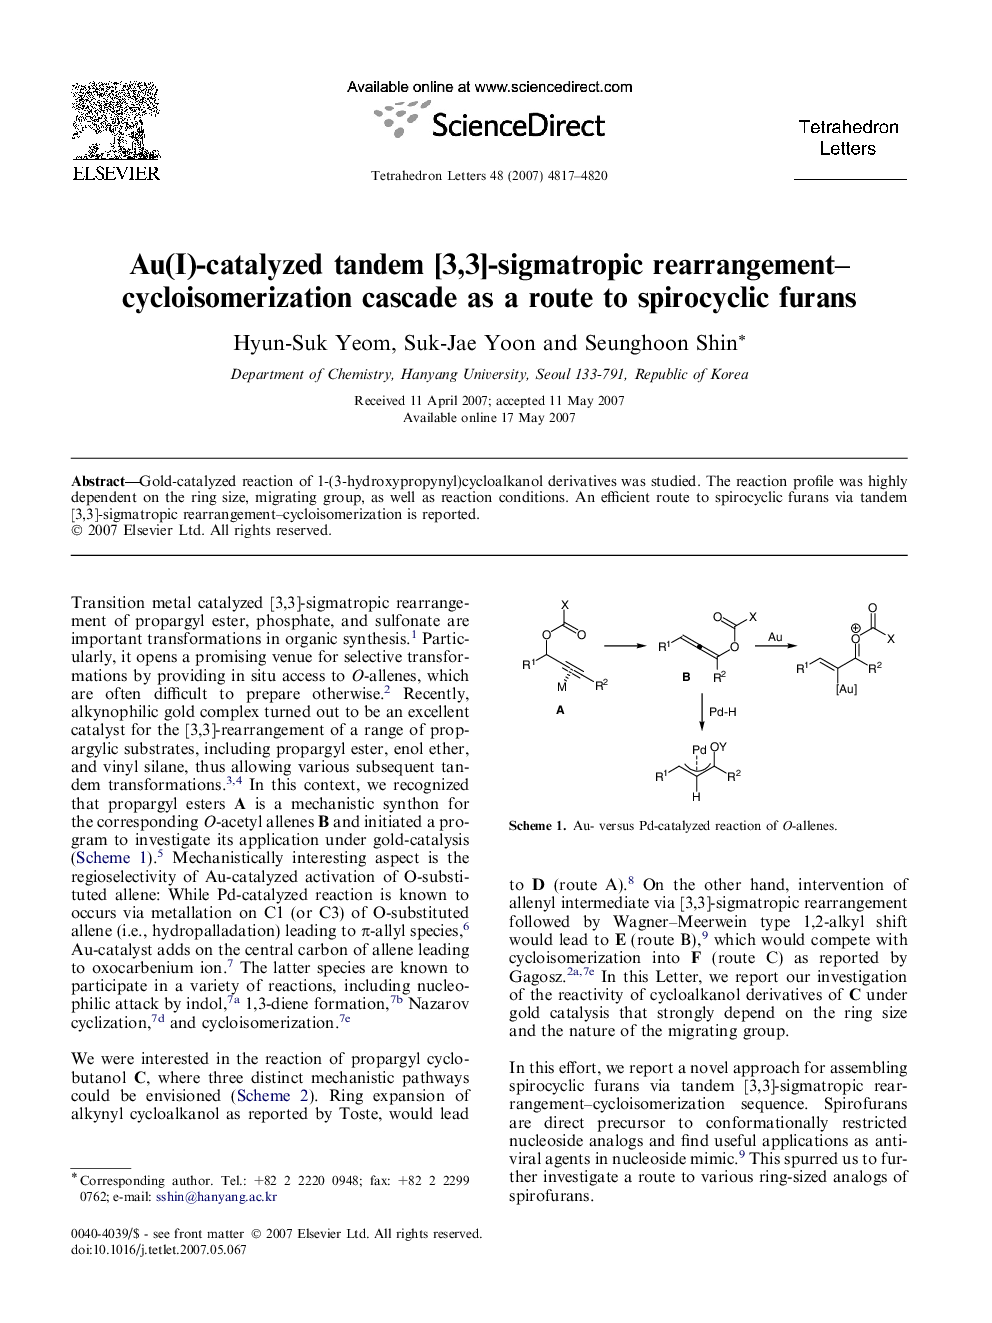 Au(I)-catalyzed tandem [3,3]-sigmatropic rearrangement-cycloisomerization cascade as a route to spirocyclic furans